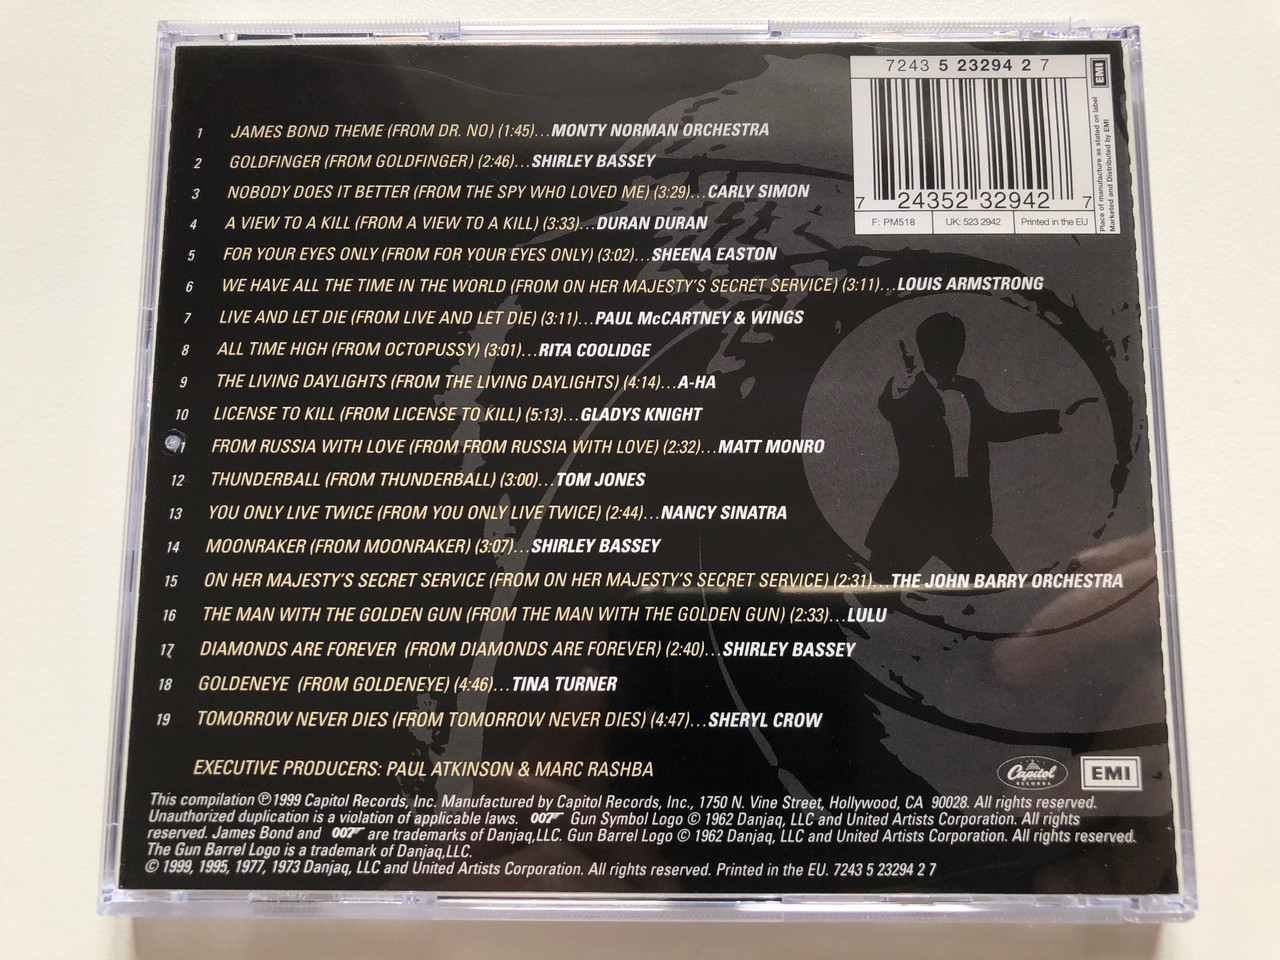 The Best Of Bond ...James Bond / Capitol Records, Audio CD 1999 ...